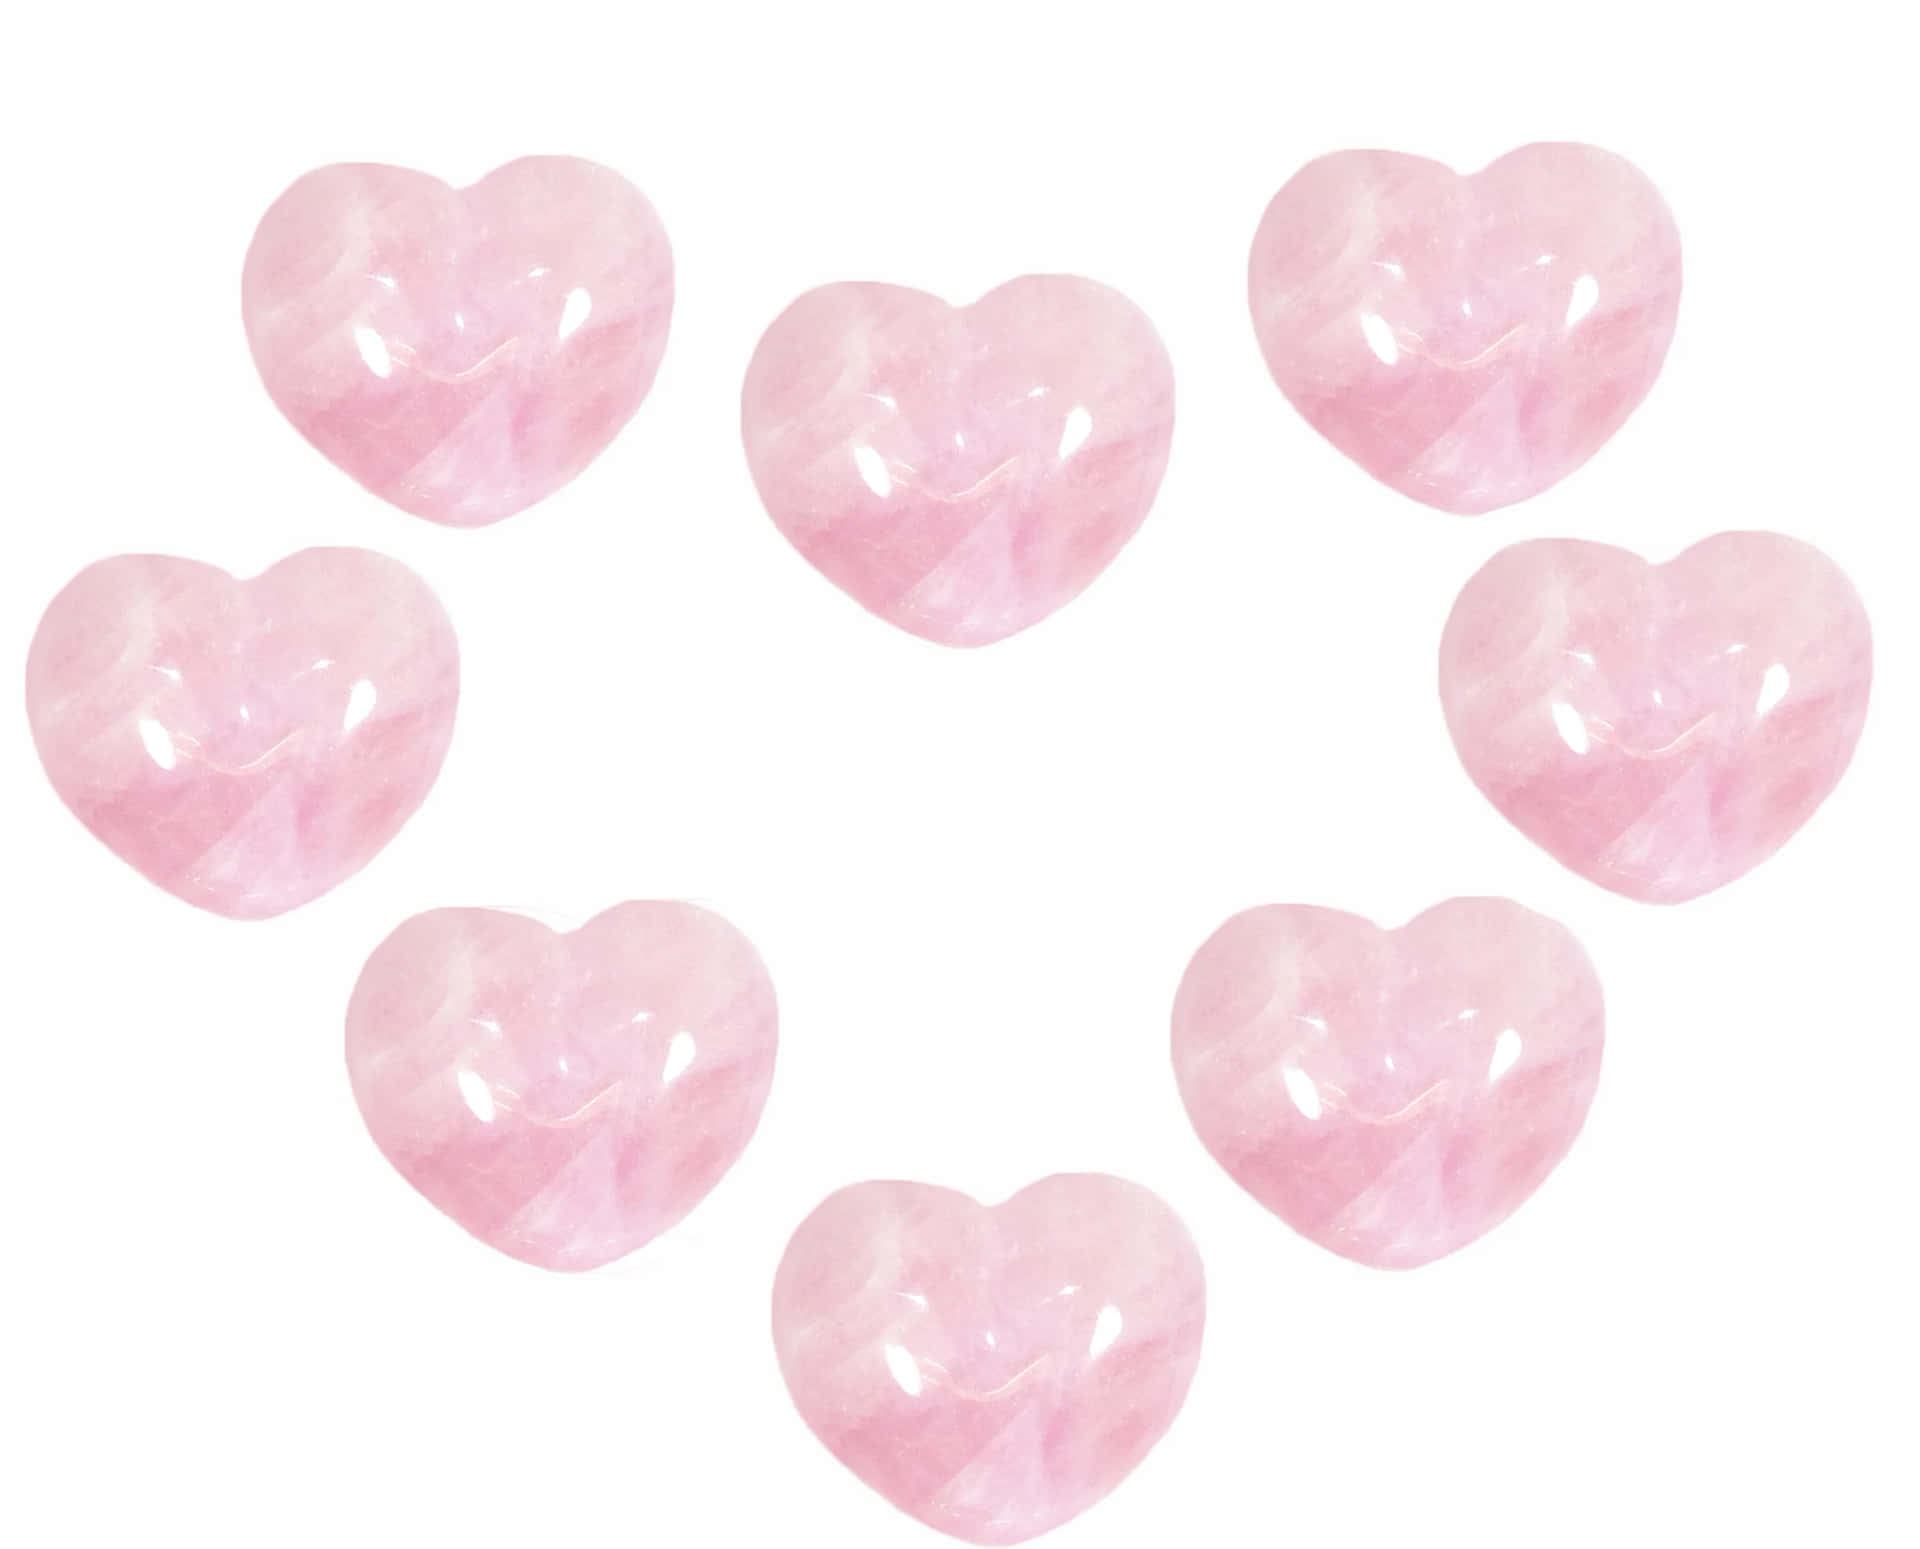 Enchanting Pink Crystal Quartz Cluster Wallpaper